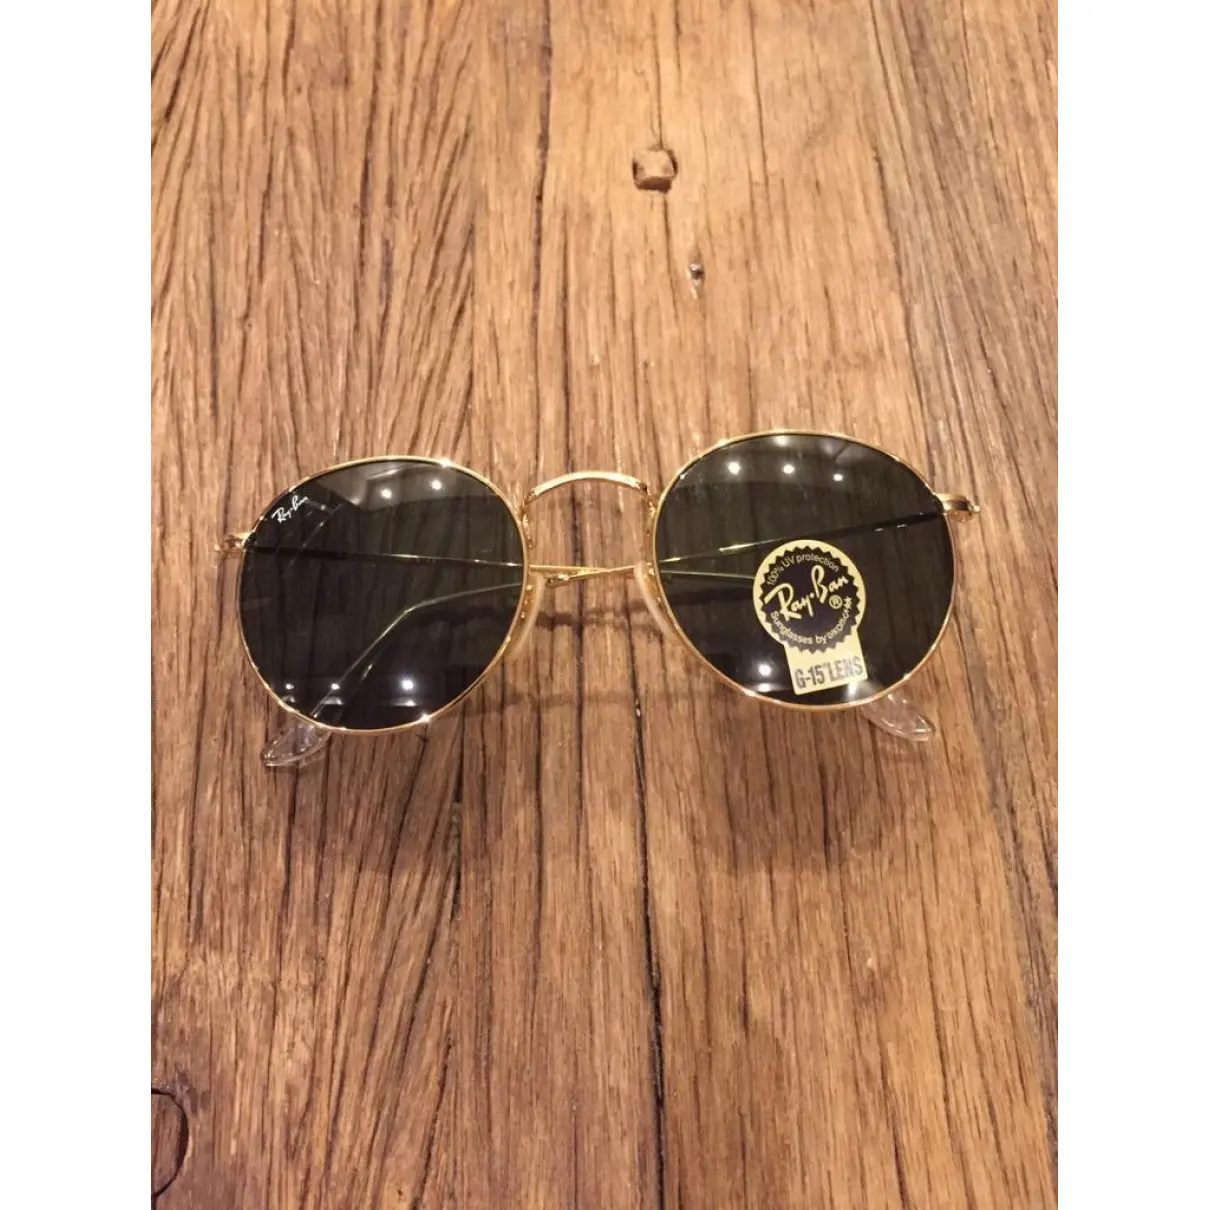 Buy Ray-Ban Round sunglasses online